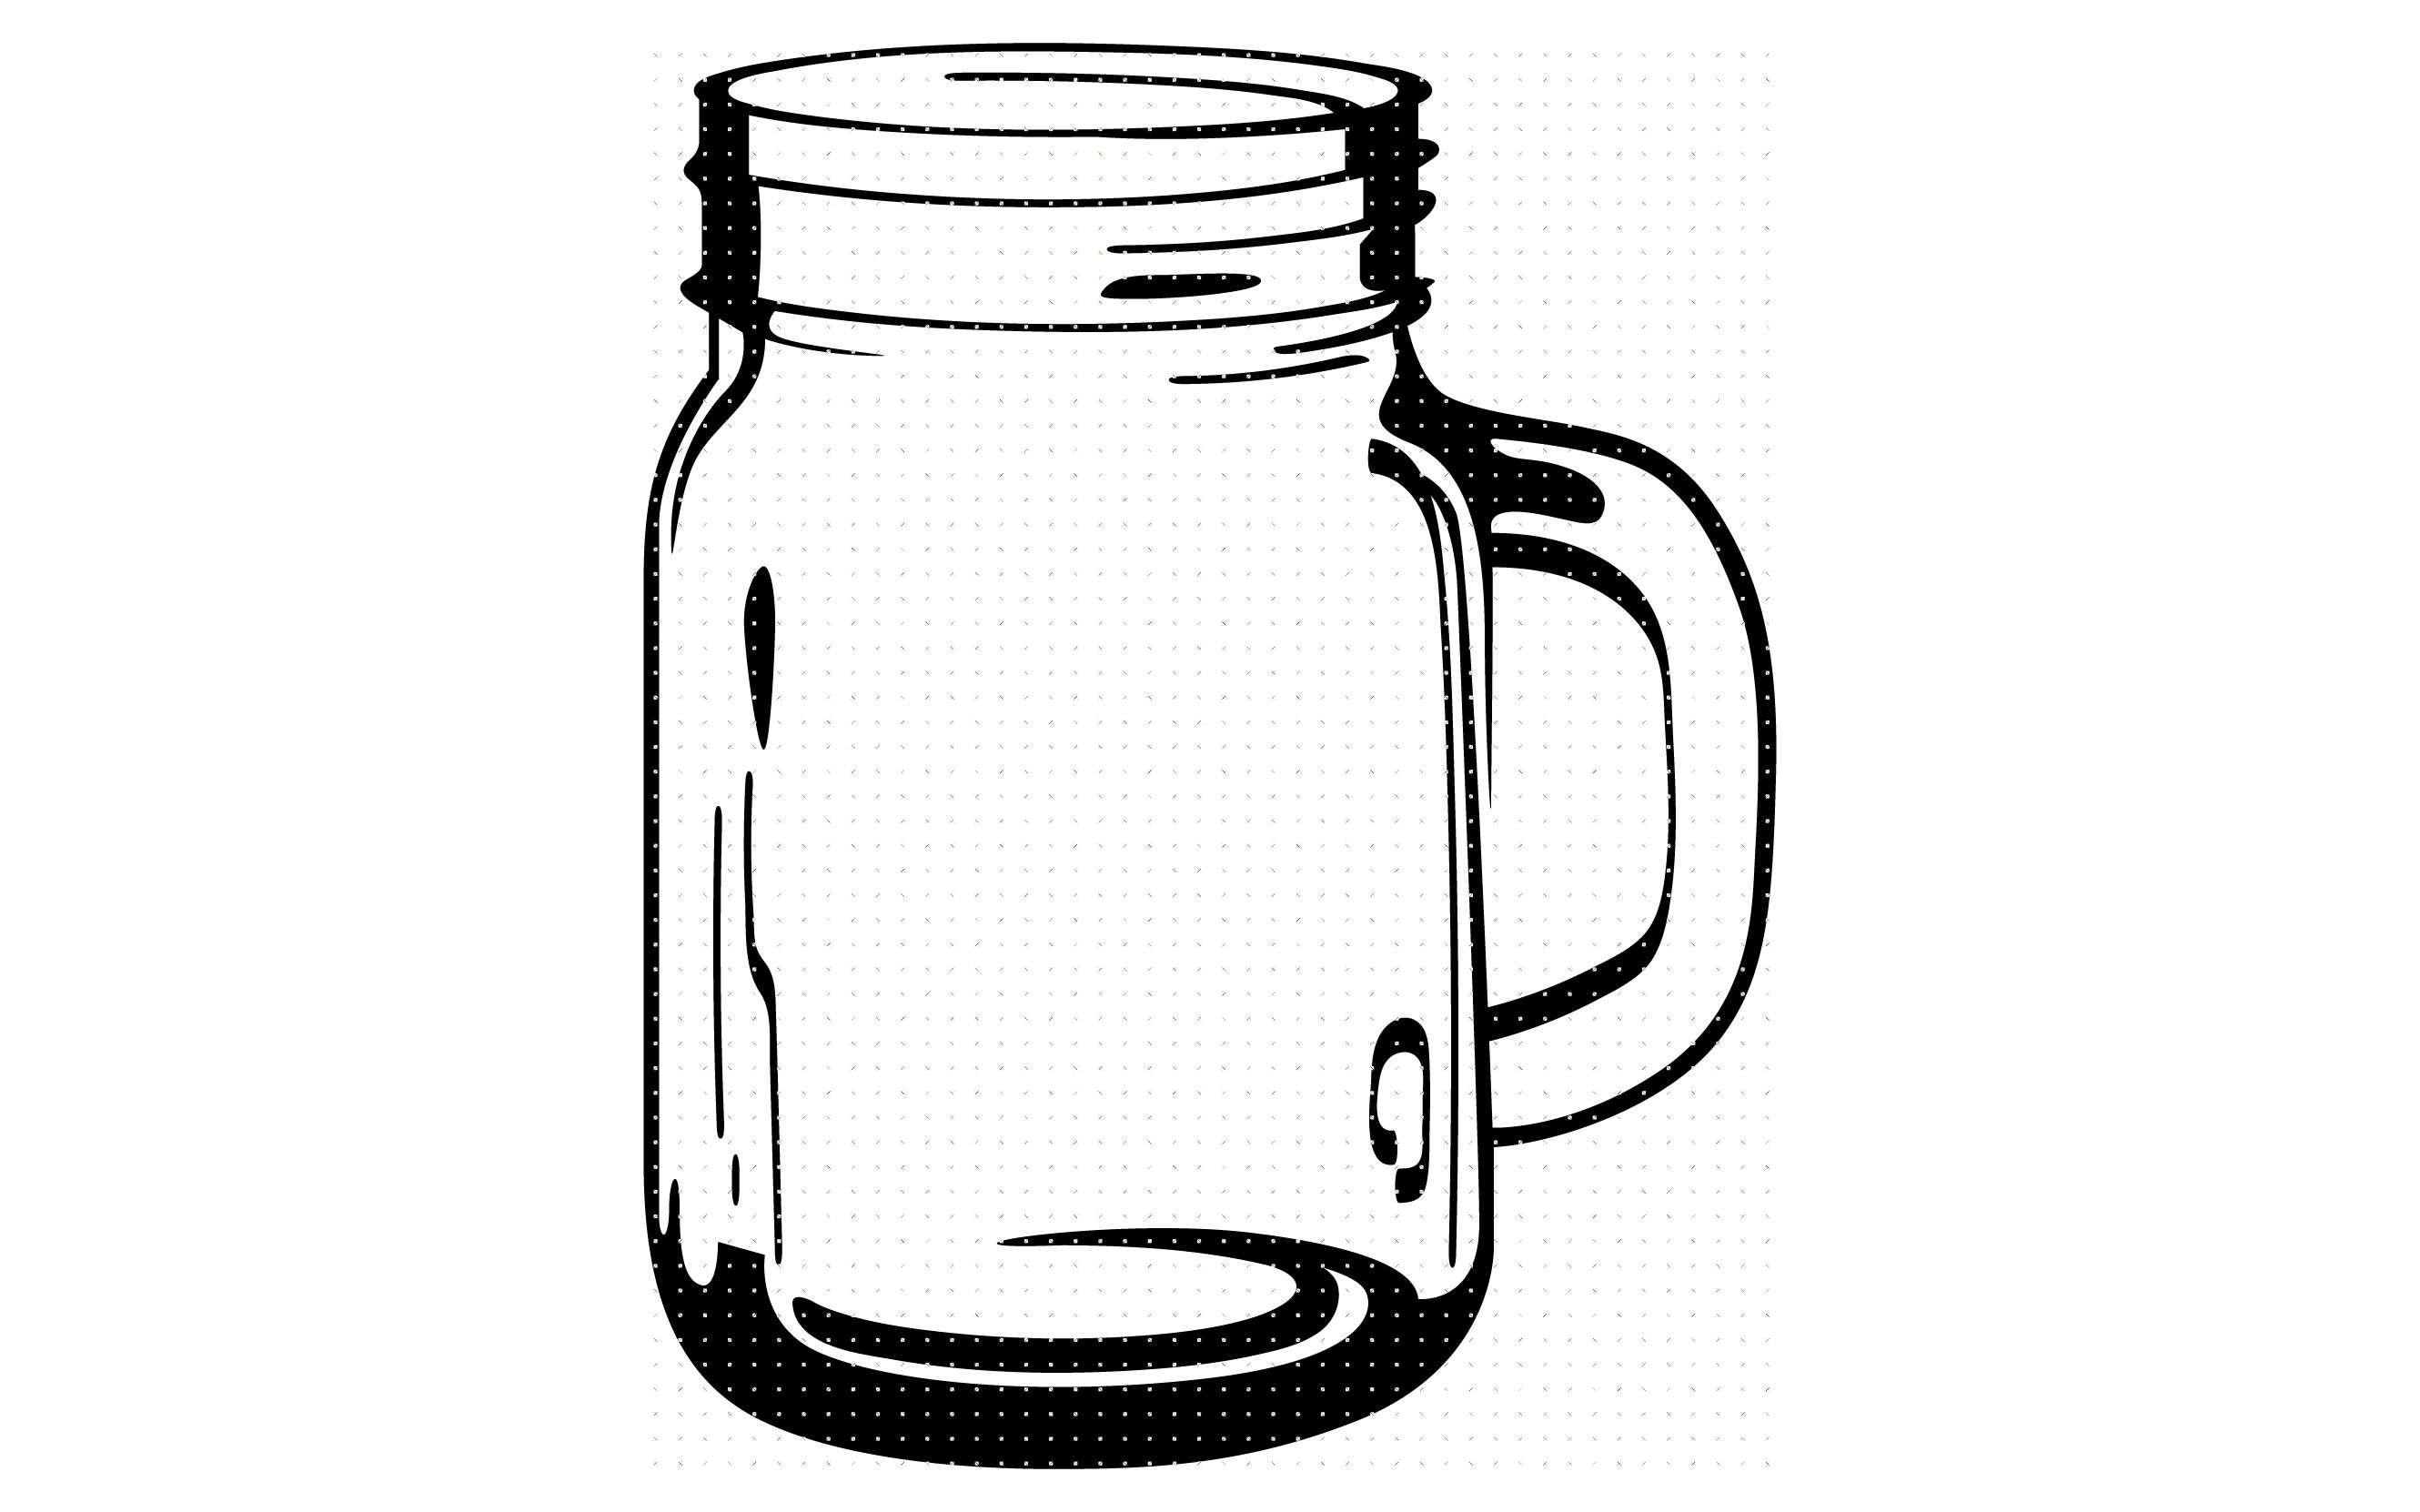 Hand Drawn Mason Jar SVG File, Drawn clipart, Cutting File, Cut File